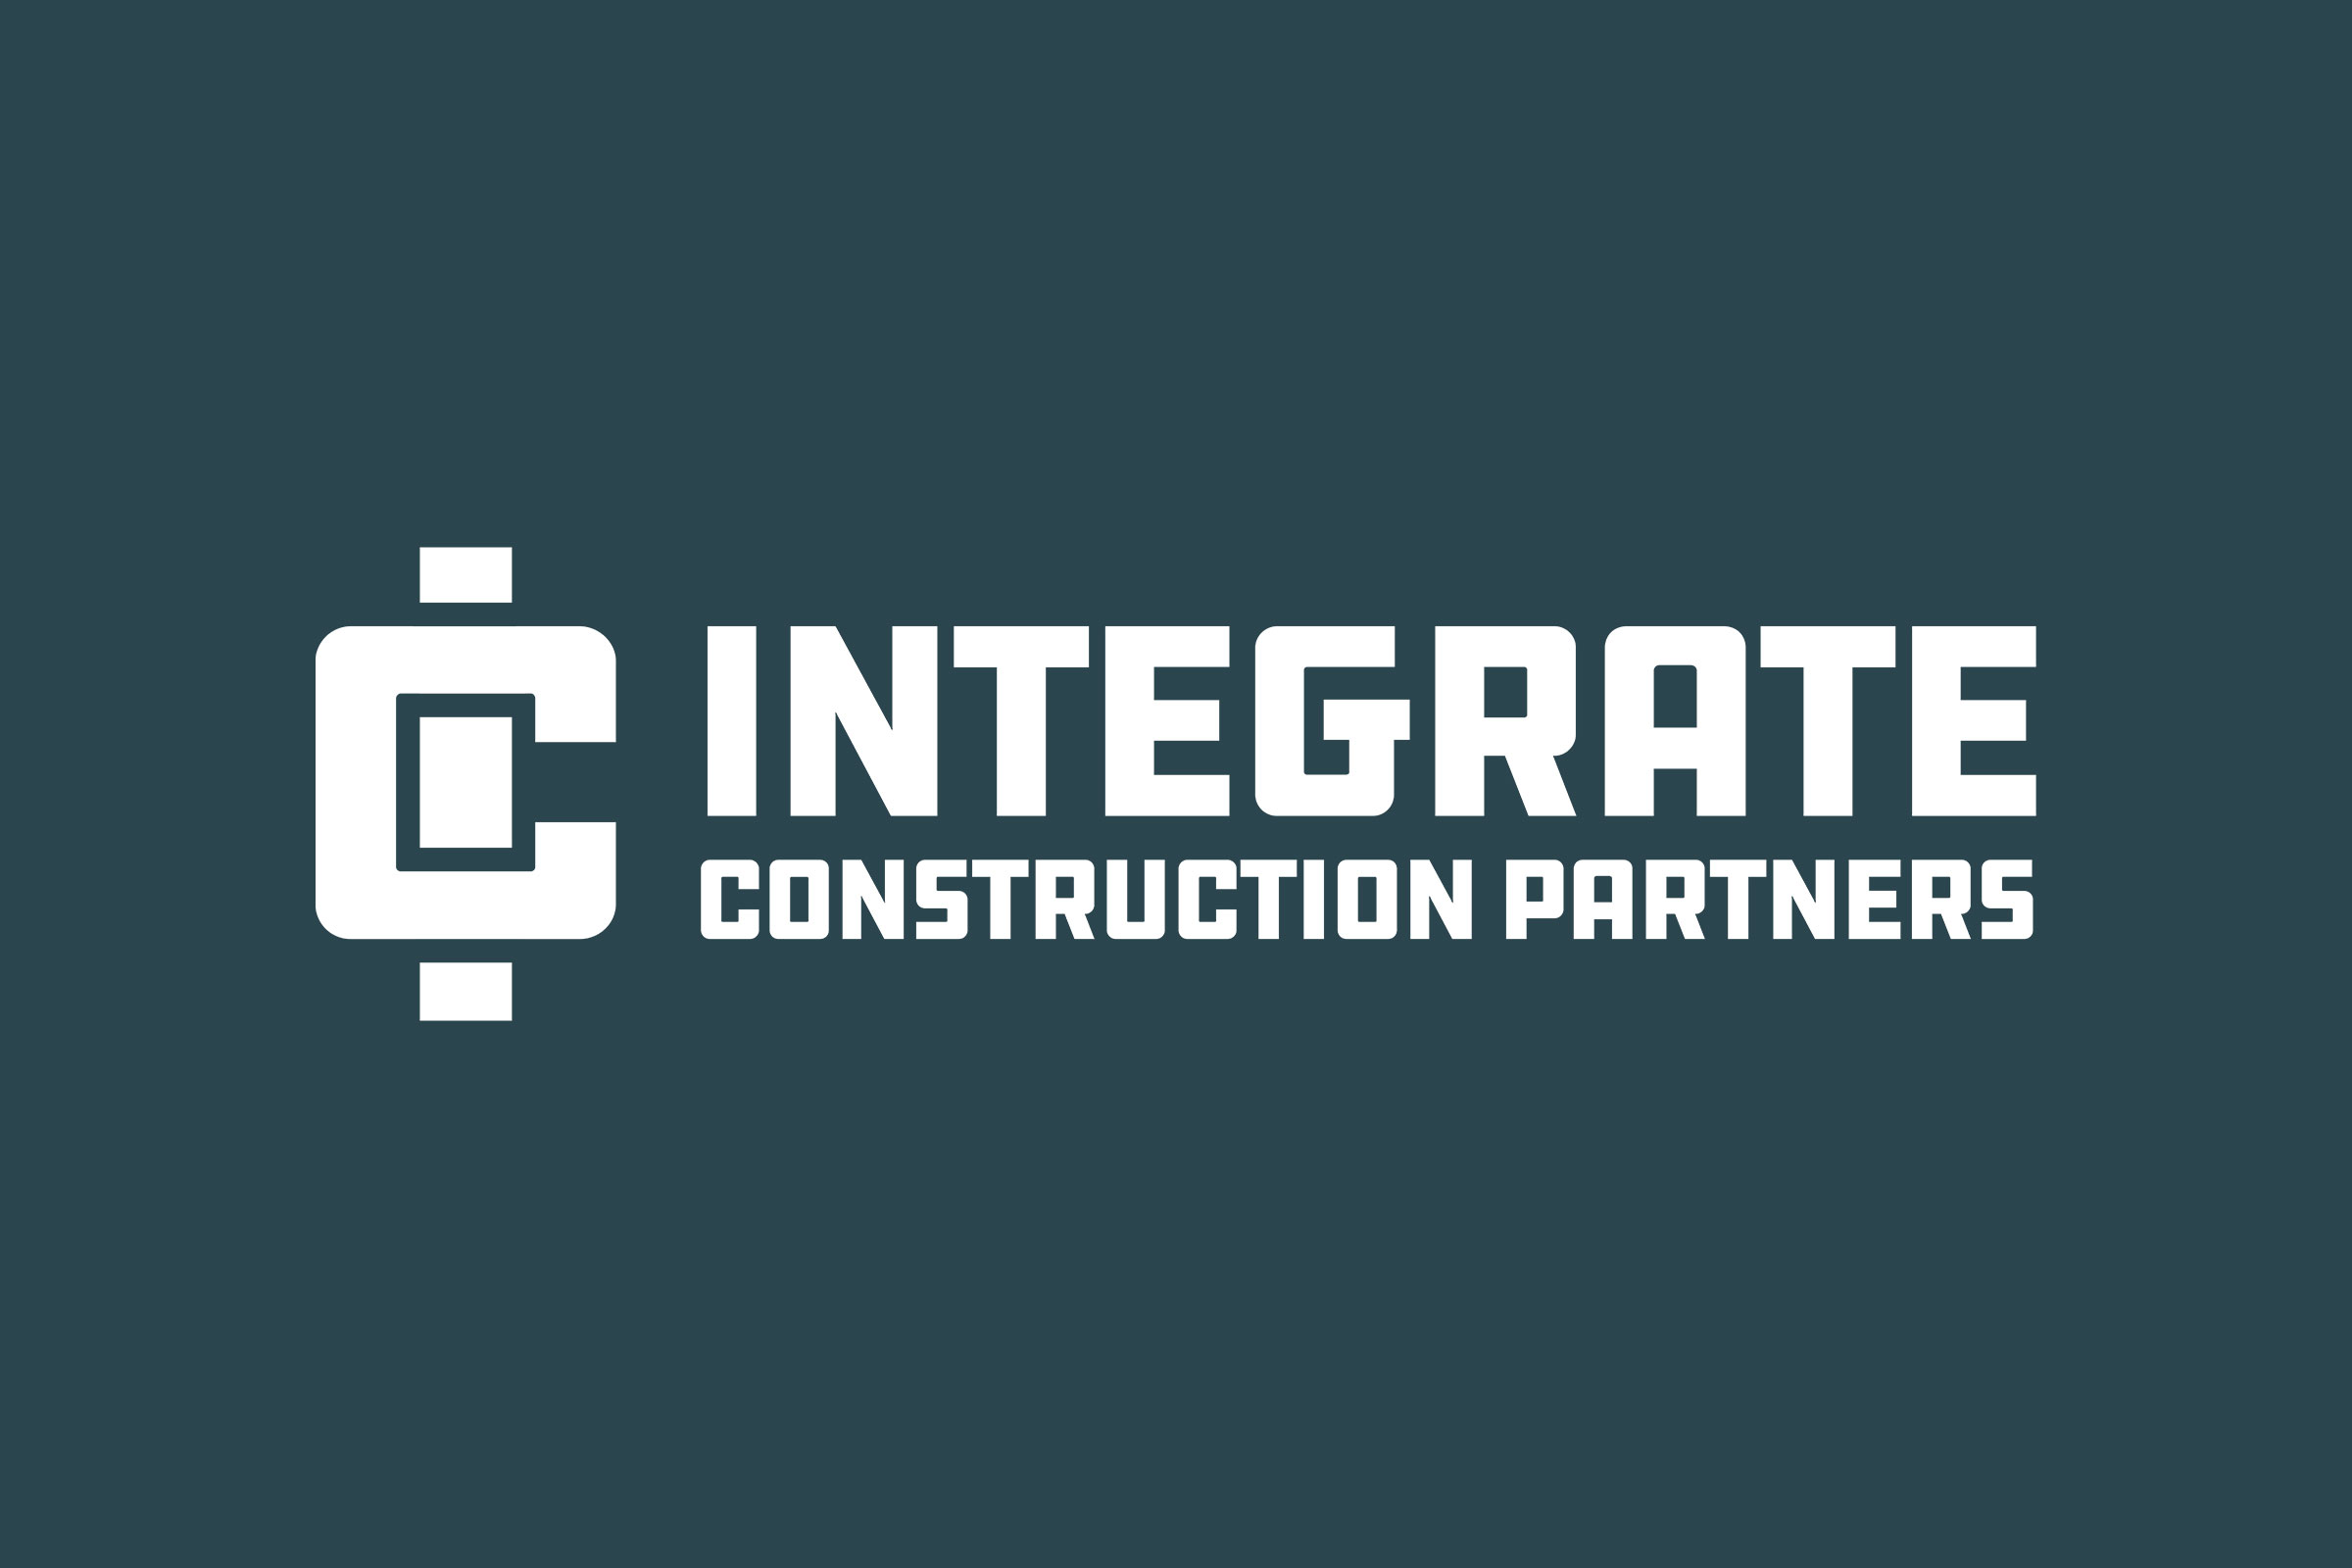 Integrate Construction Partners